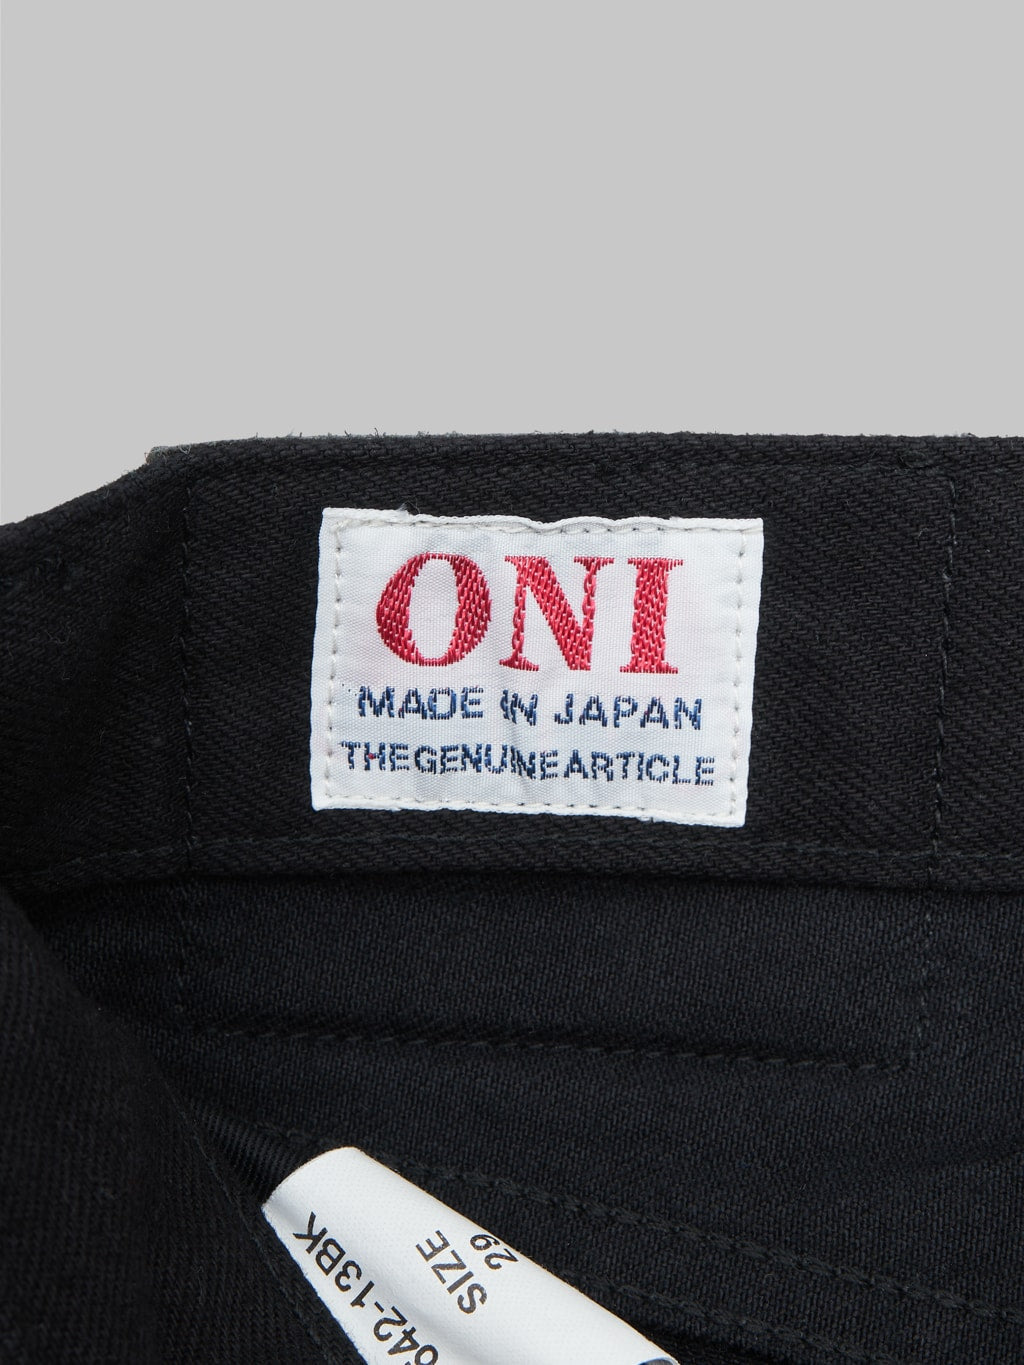 ONI Denim 242-13BK "Jet Black Denim" 13oz Super Wide Straight Jeans